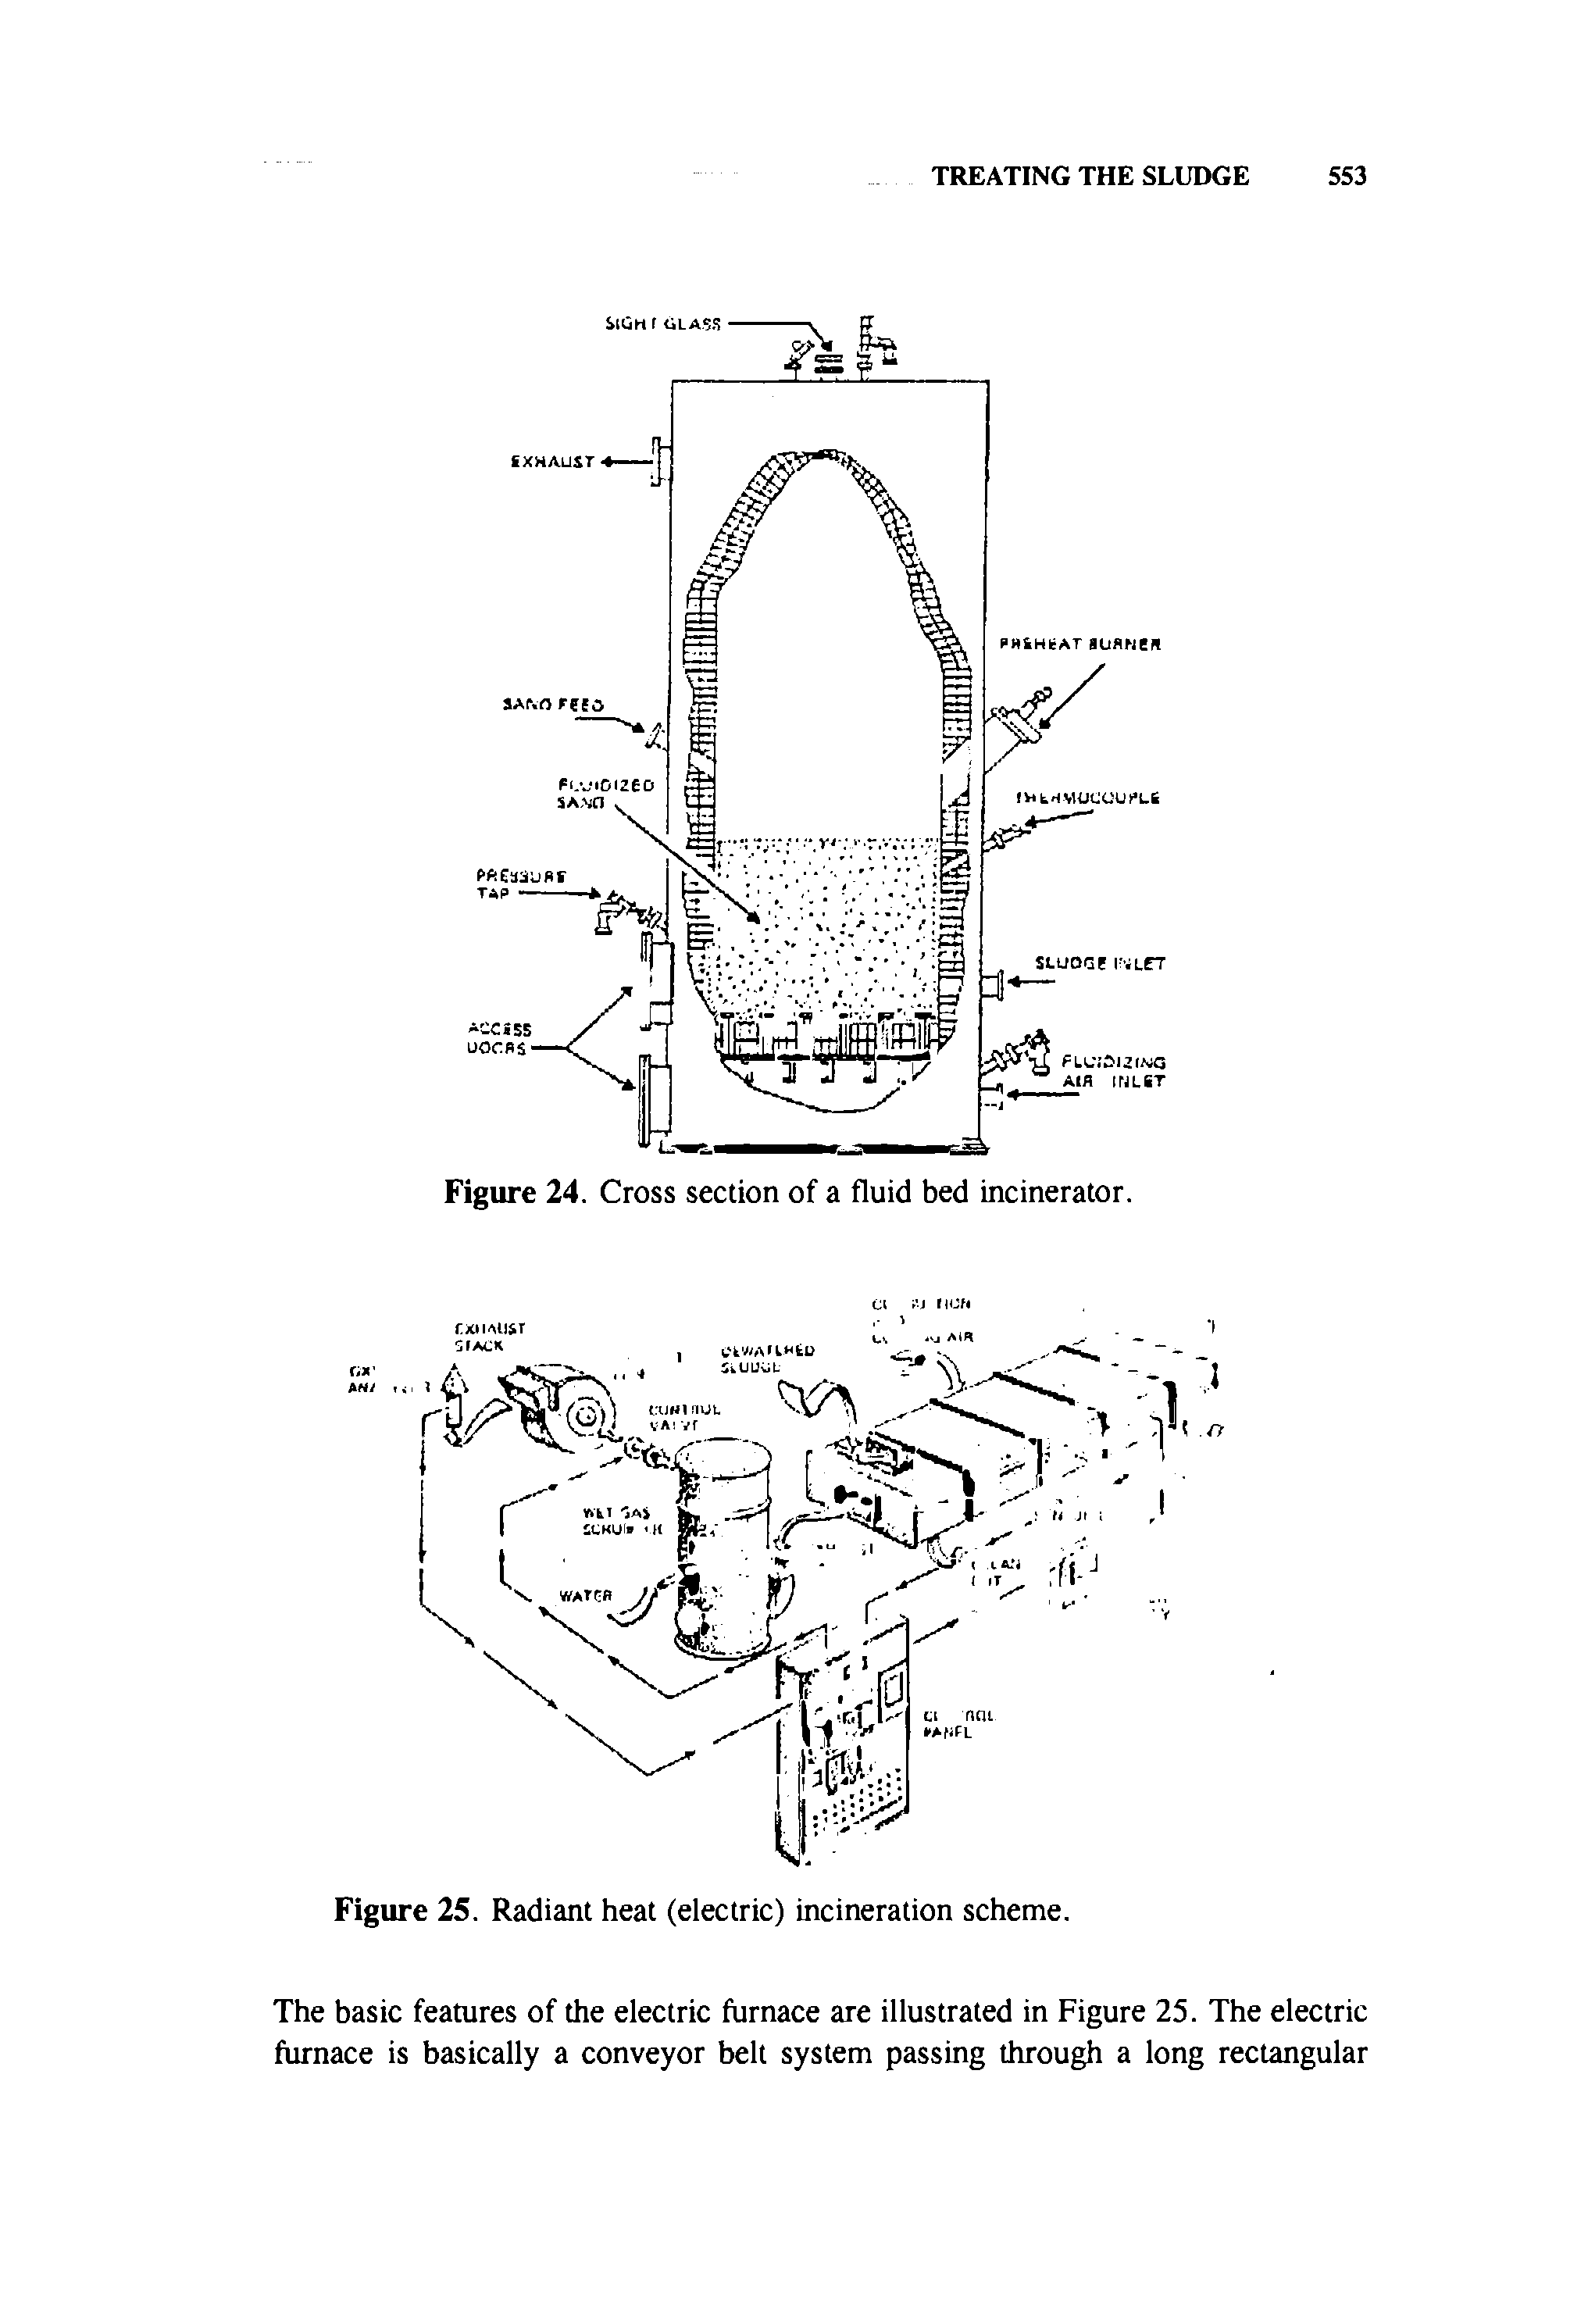 Figure 25. Radiant heat (electric) incineration scheme.